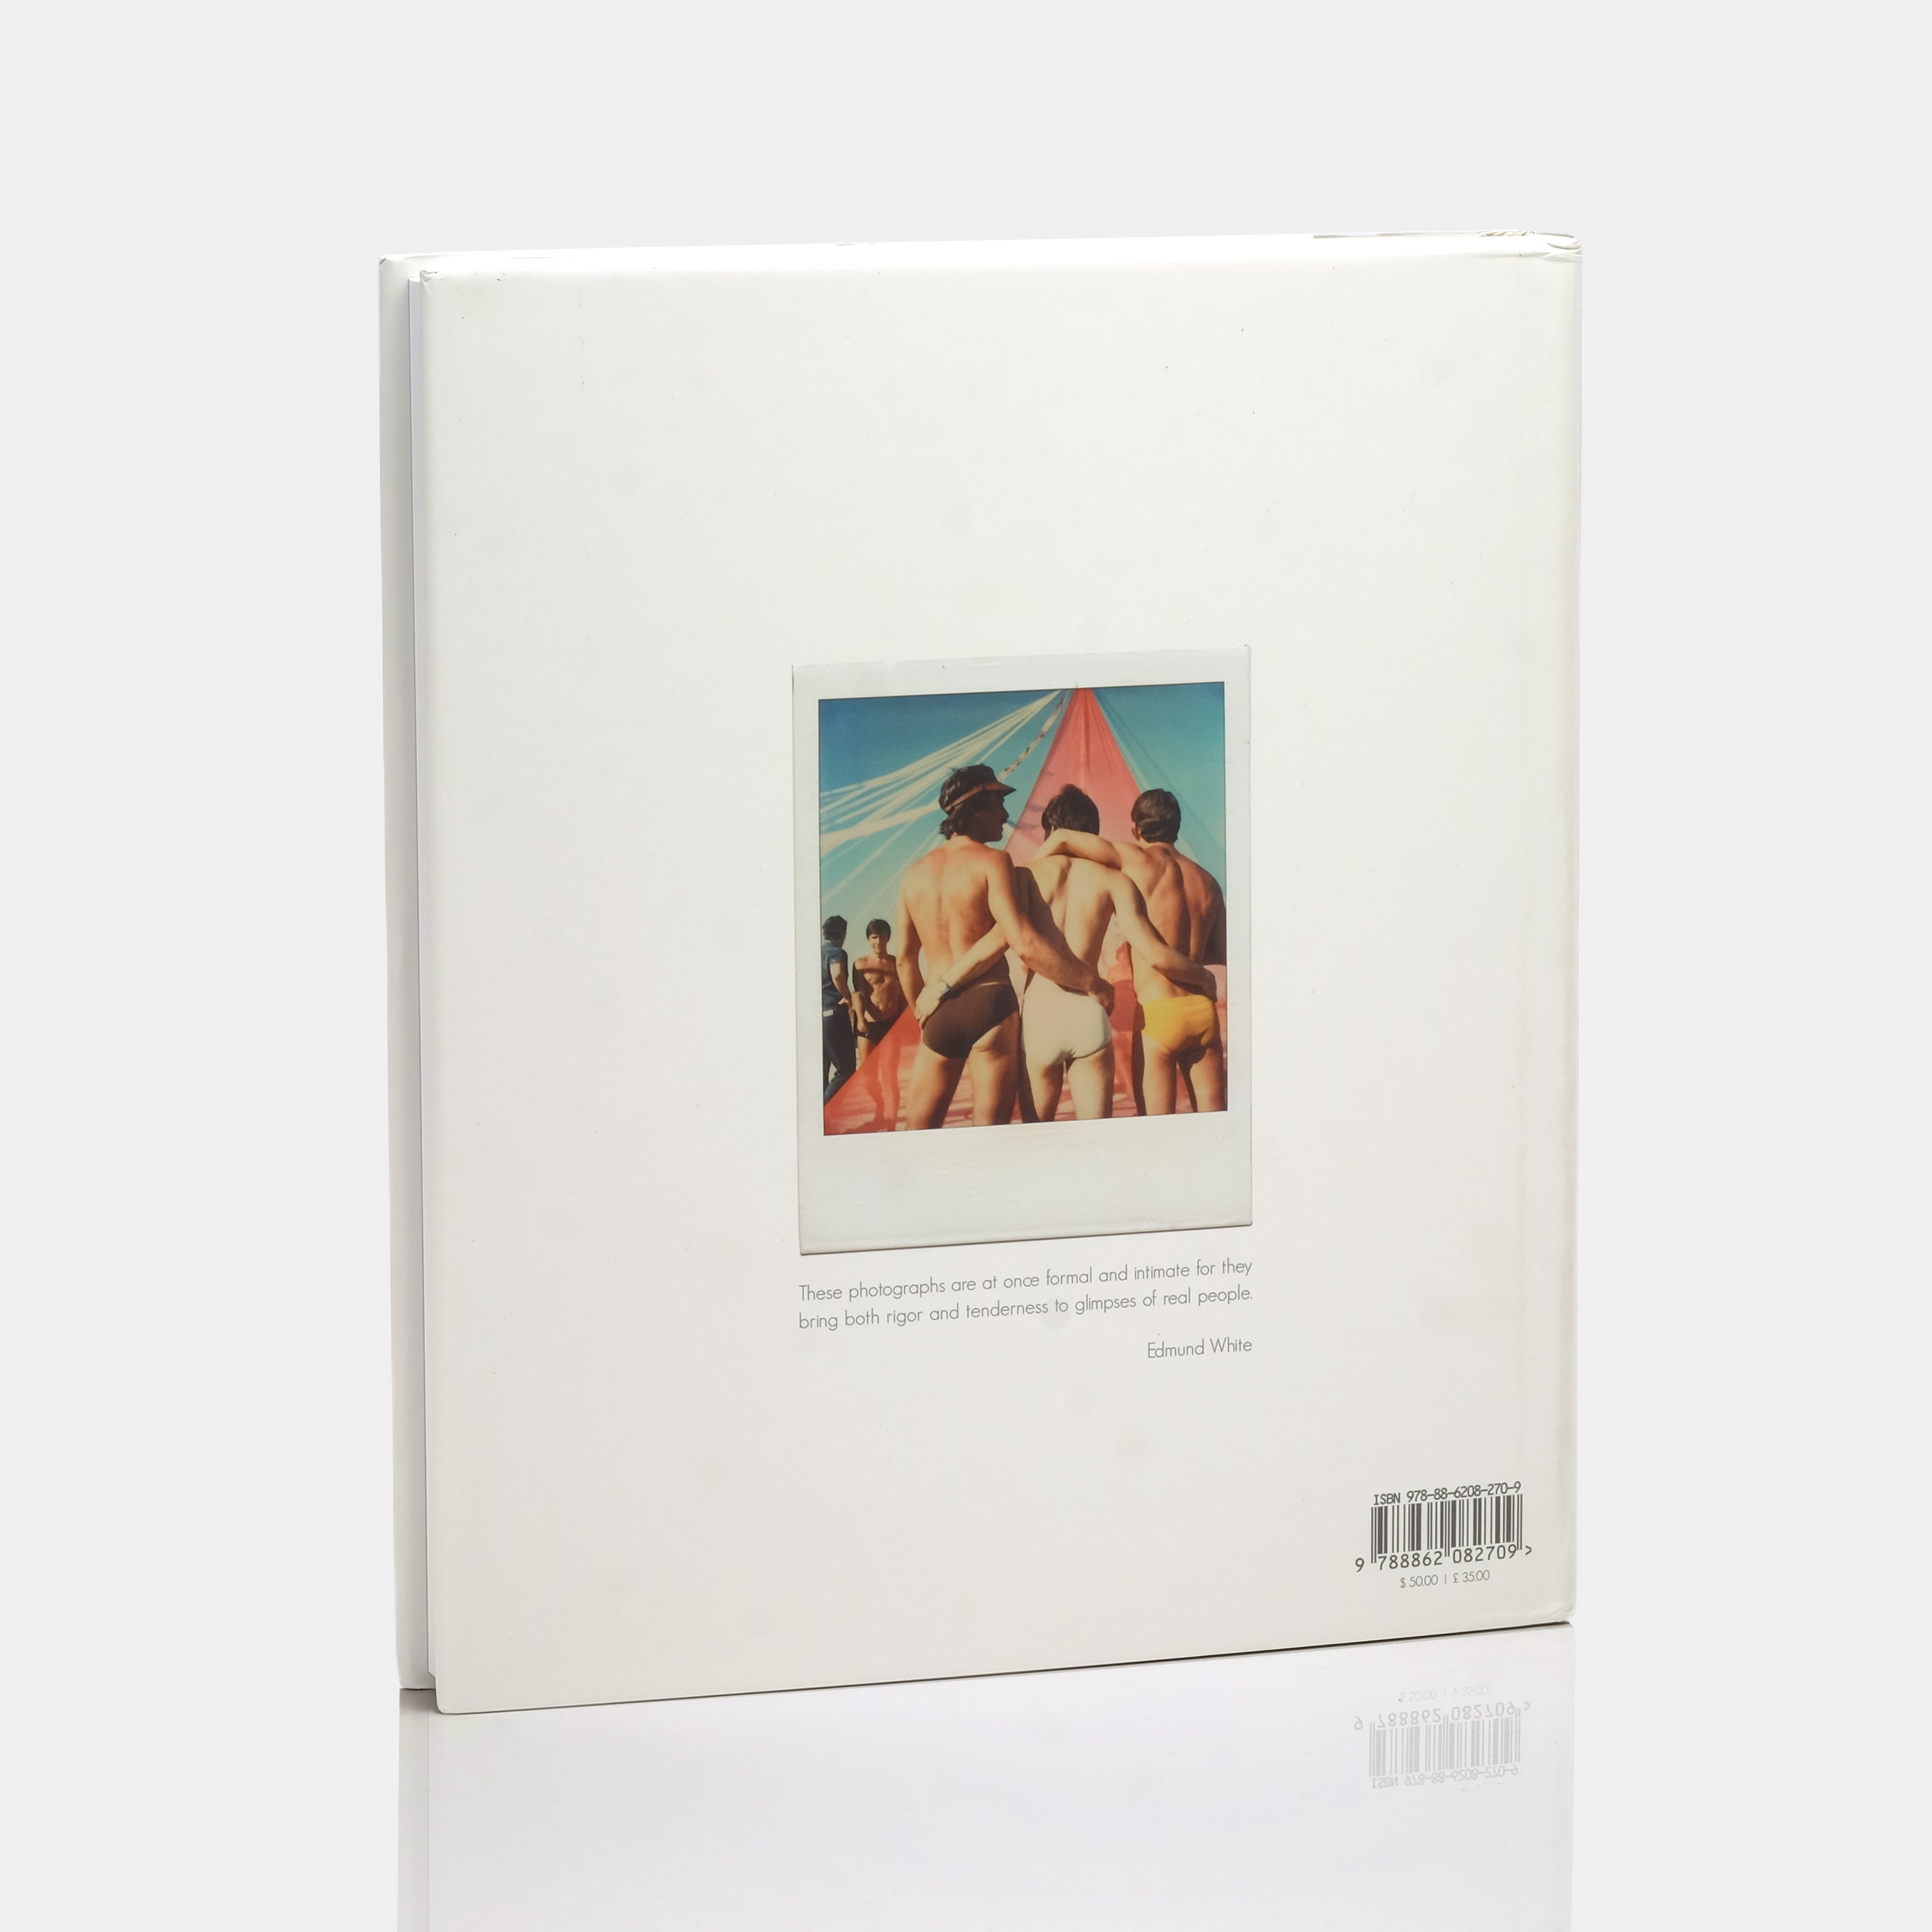 Fire Island Pines: Polaroids 1975-1983 Book